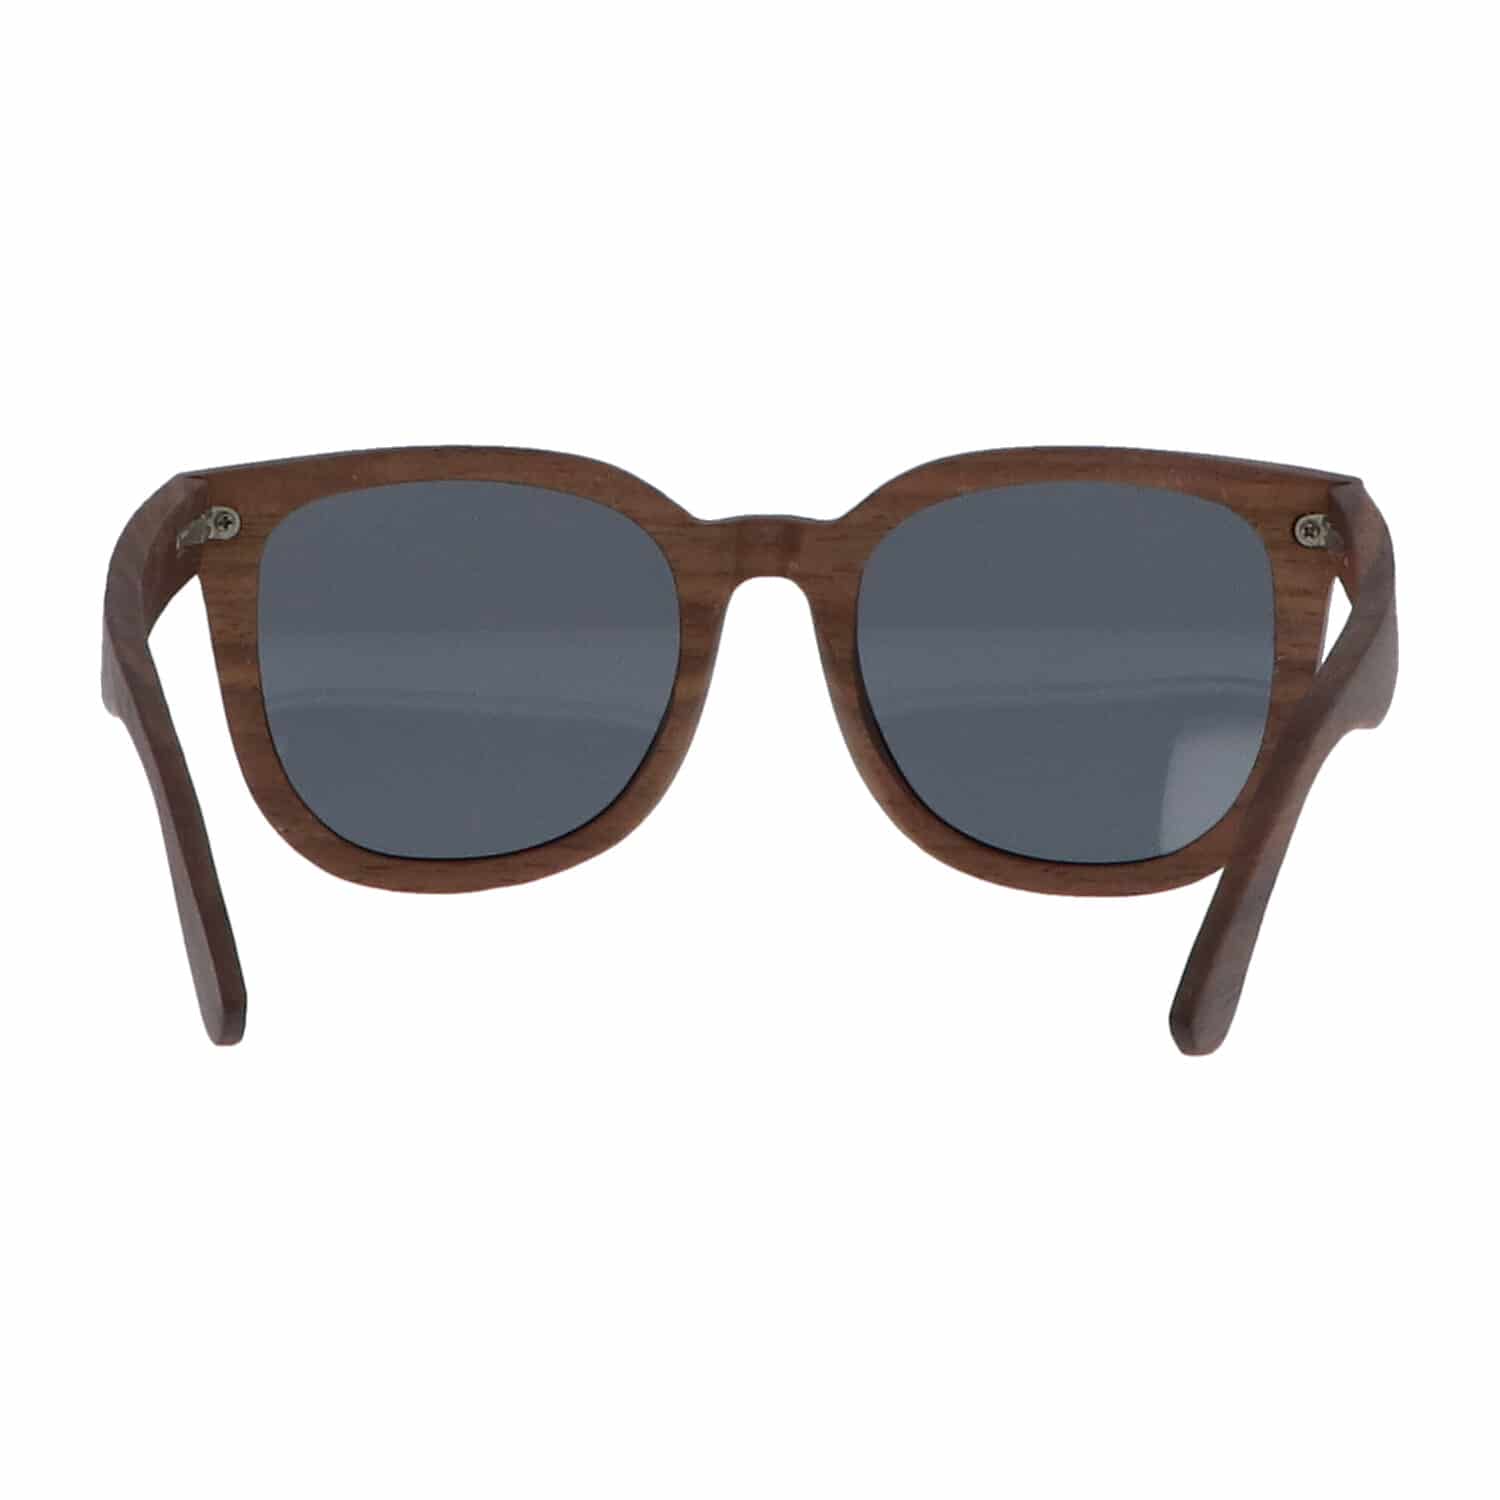 5one® Rome Walnut zonnebril met grijze lens - houten dames zonnebril